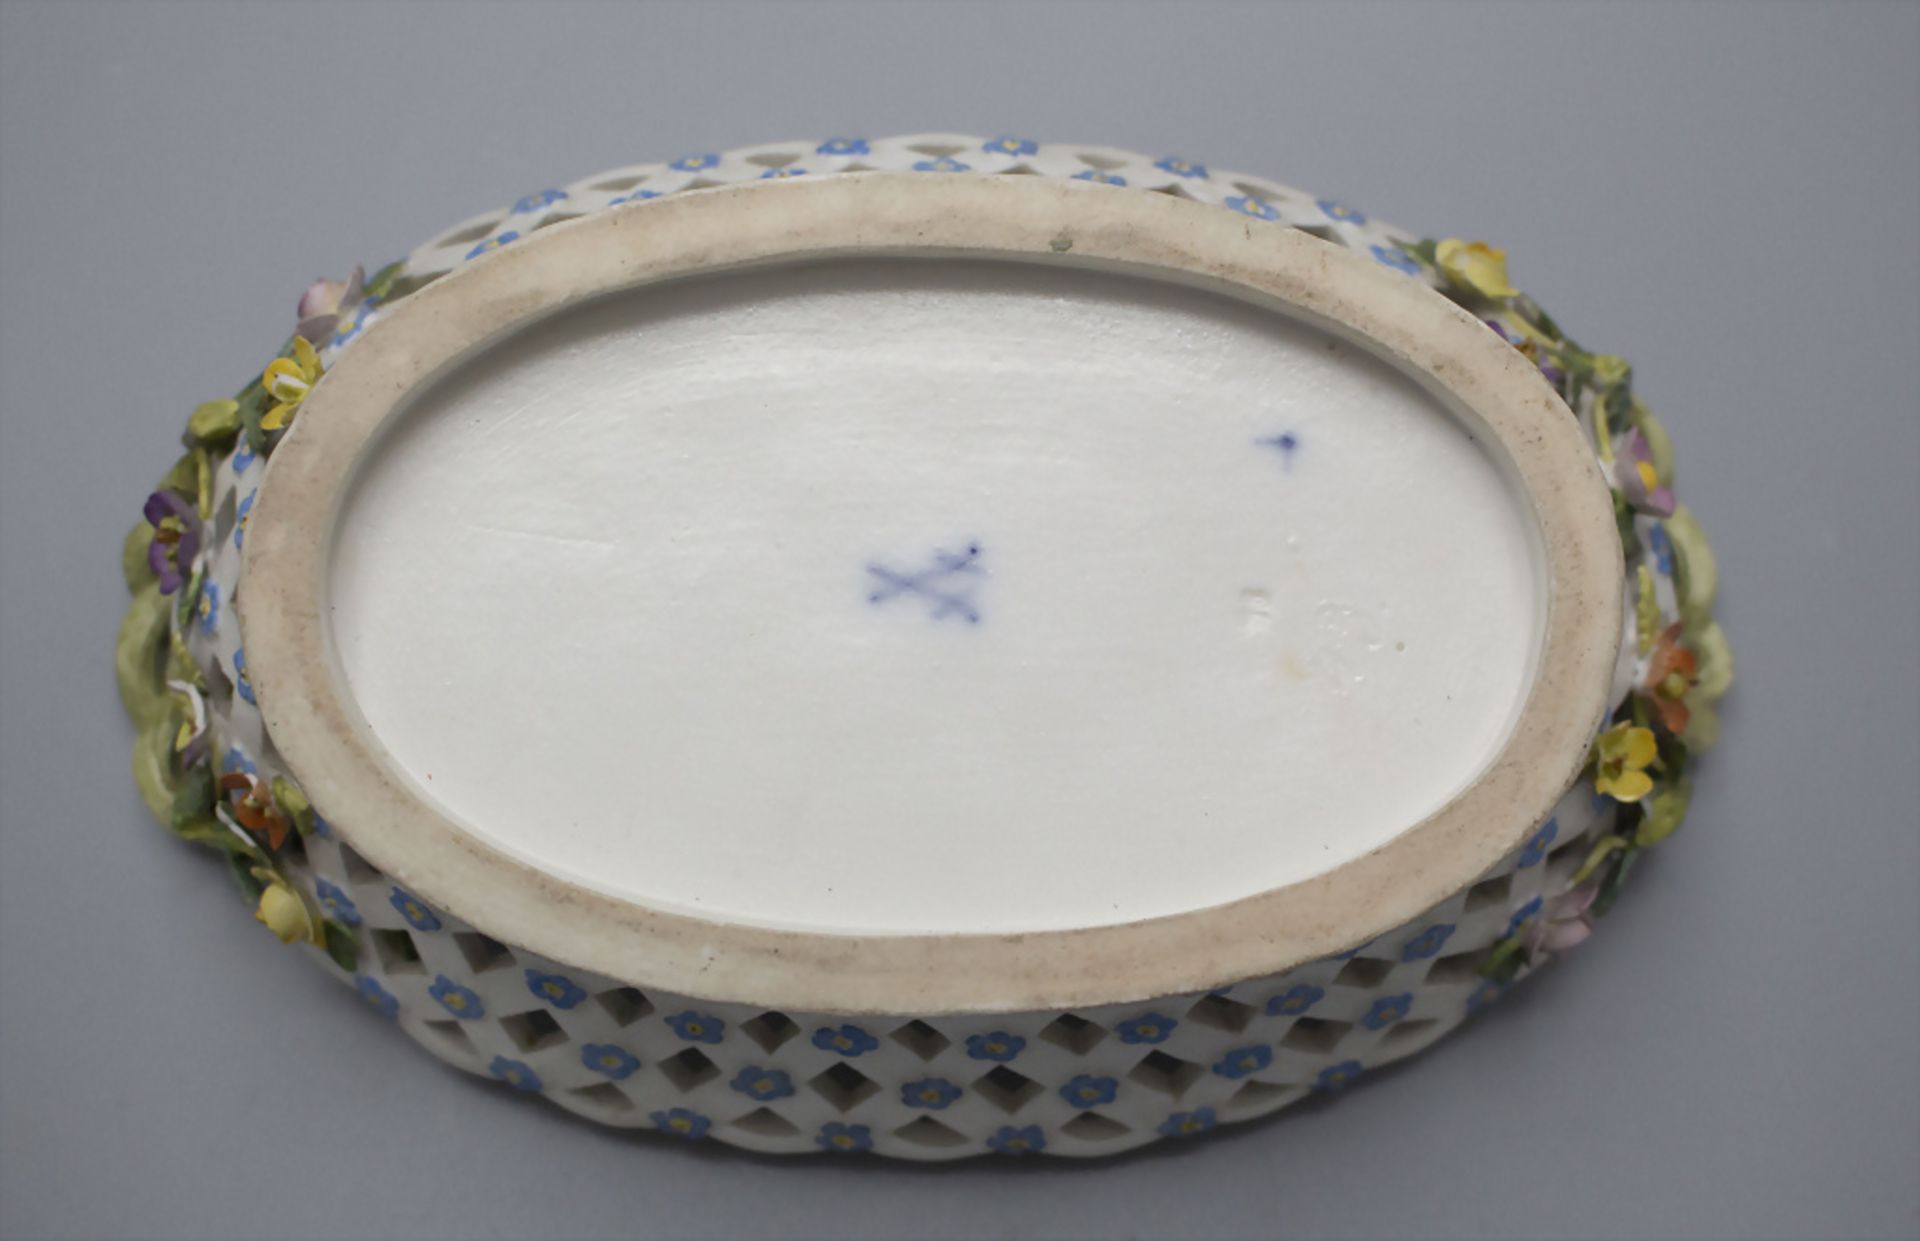 Zierschale mit aufgelegten Blüten / A decorative bowl with encrusted forget-me-not blossoms ... - Image 5 of 5